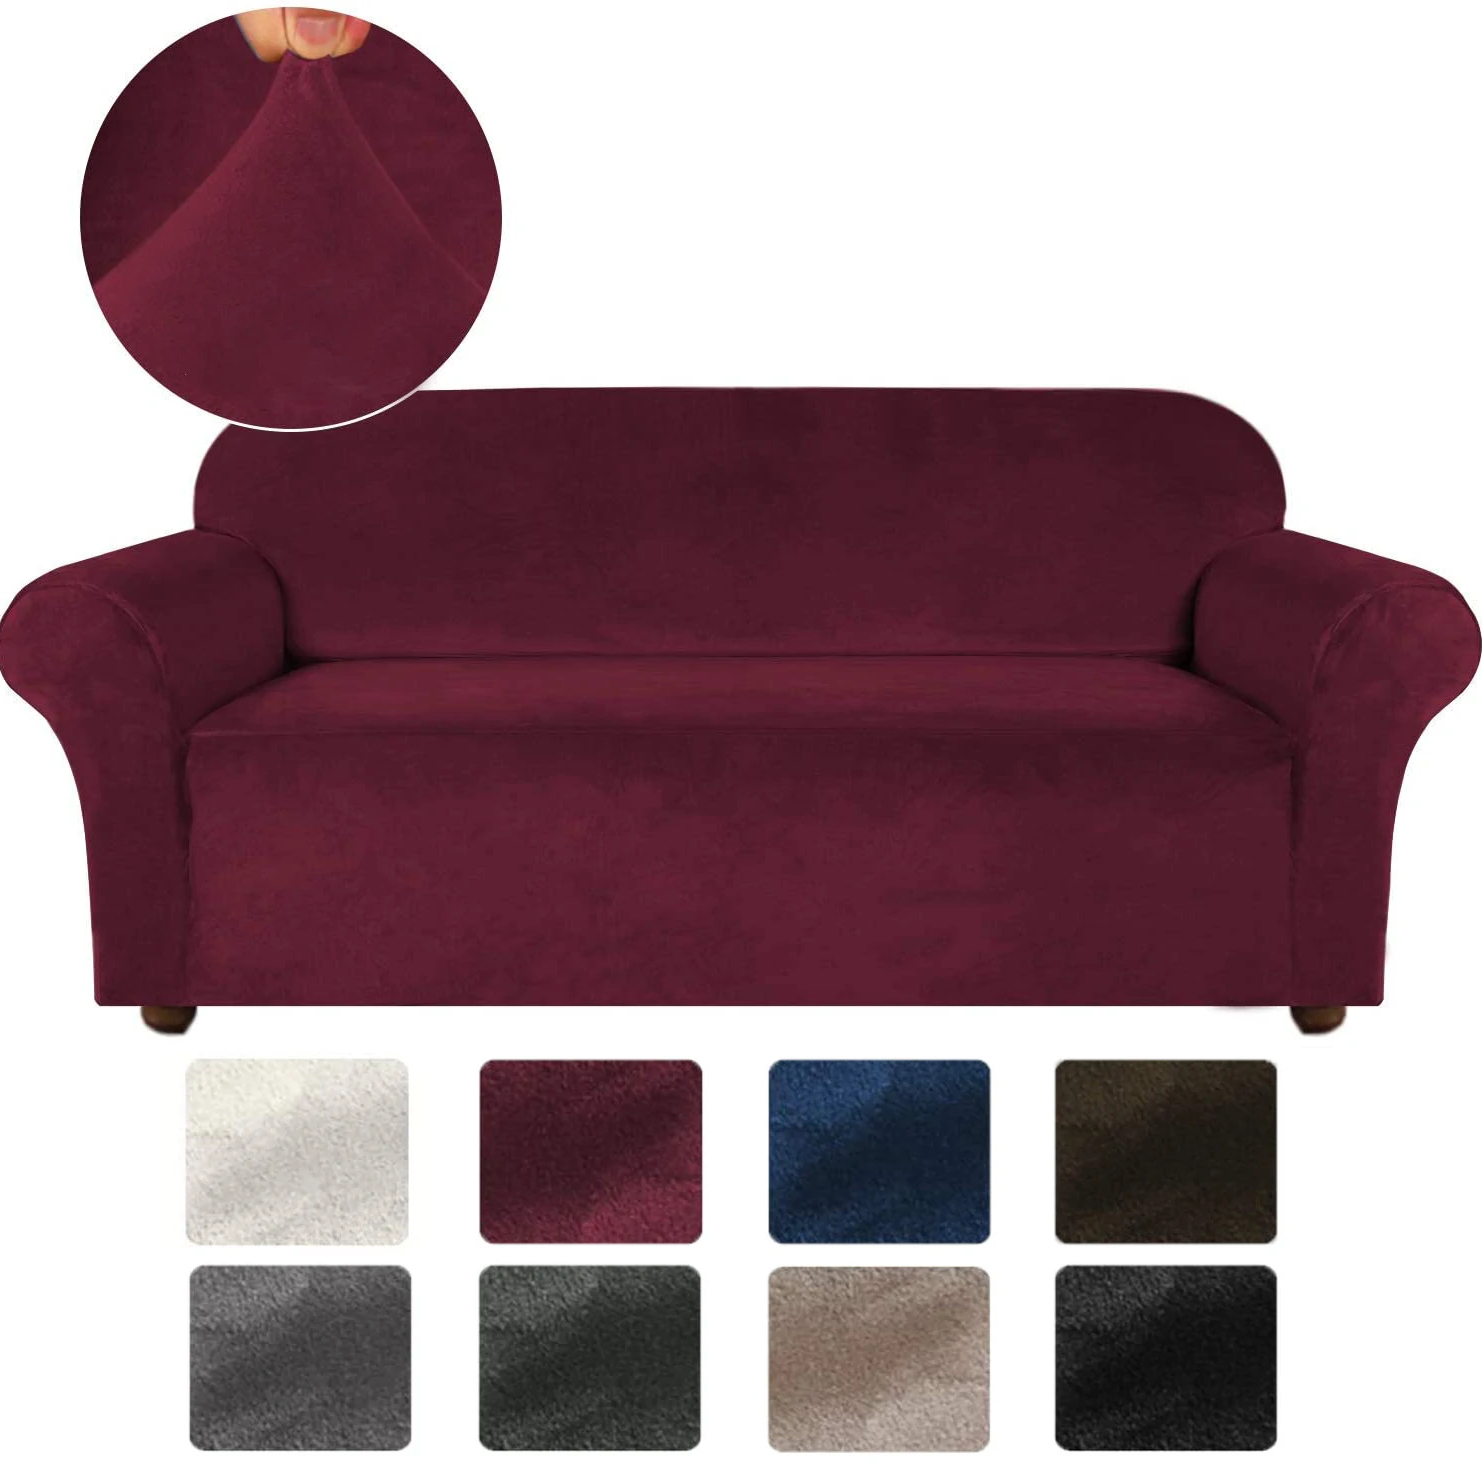 4 Seater Velvet Sofa Cover Solid Colour Thicken Plush Anti-slip Super Soft - wine red